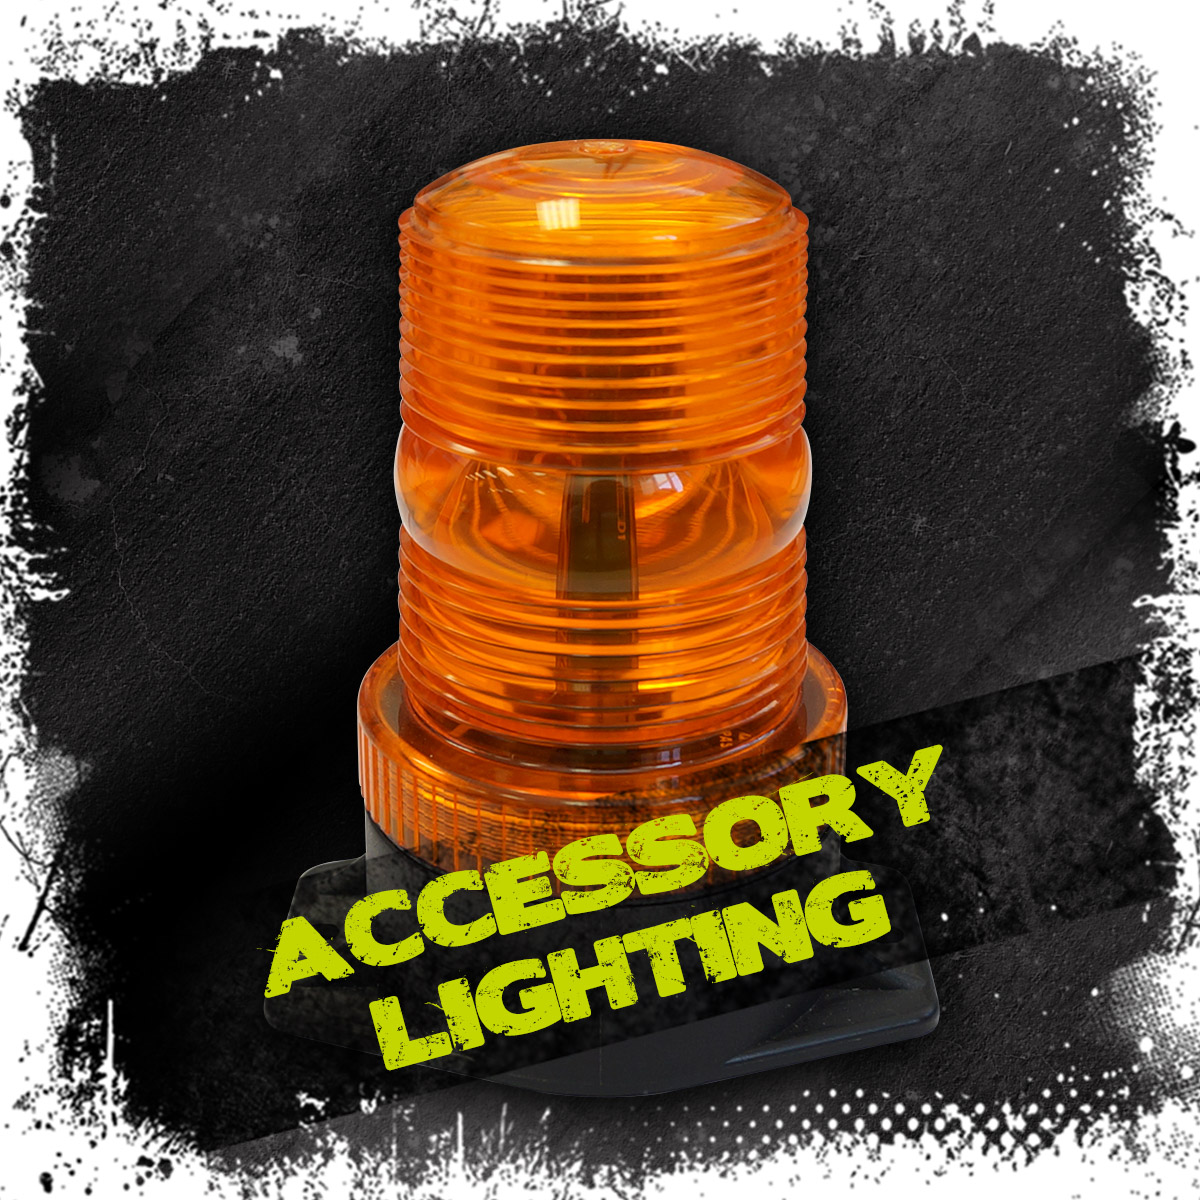 Accessory Lighting